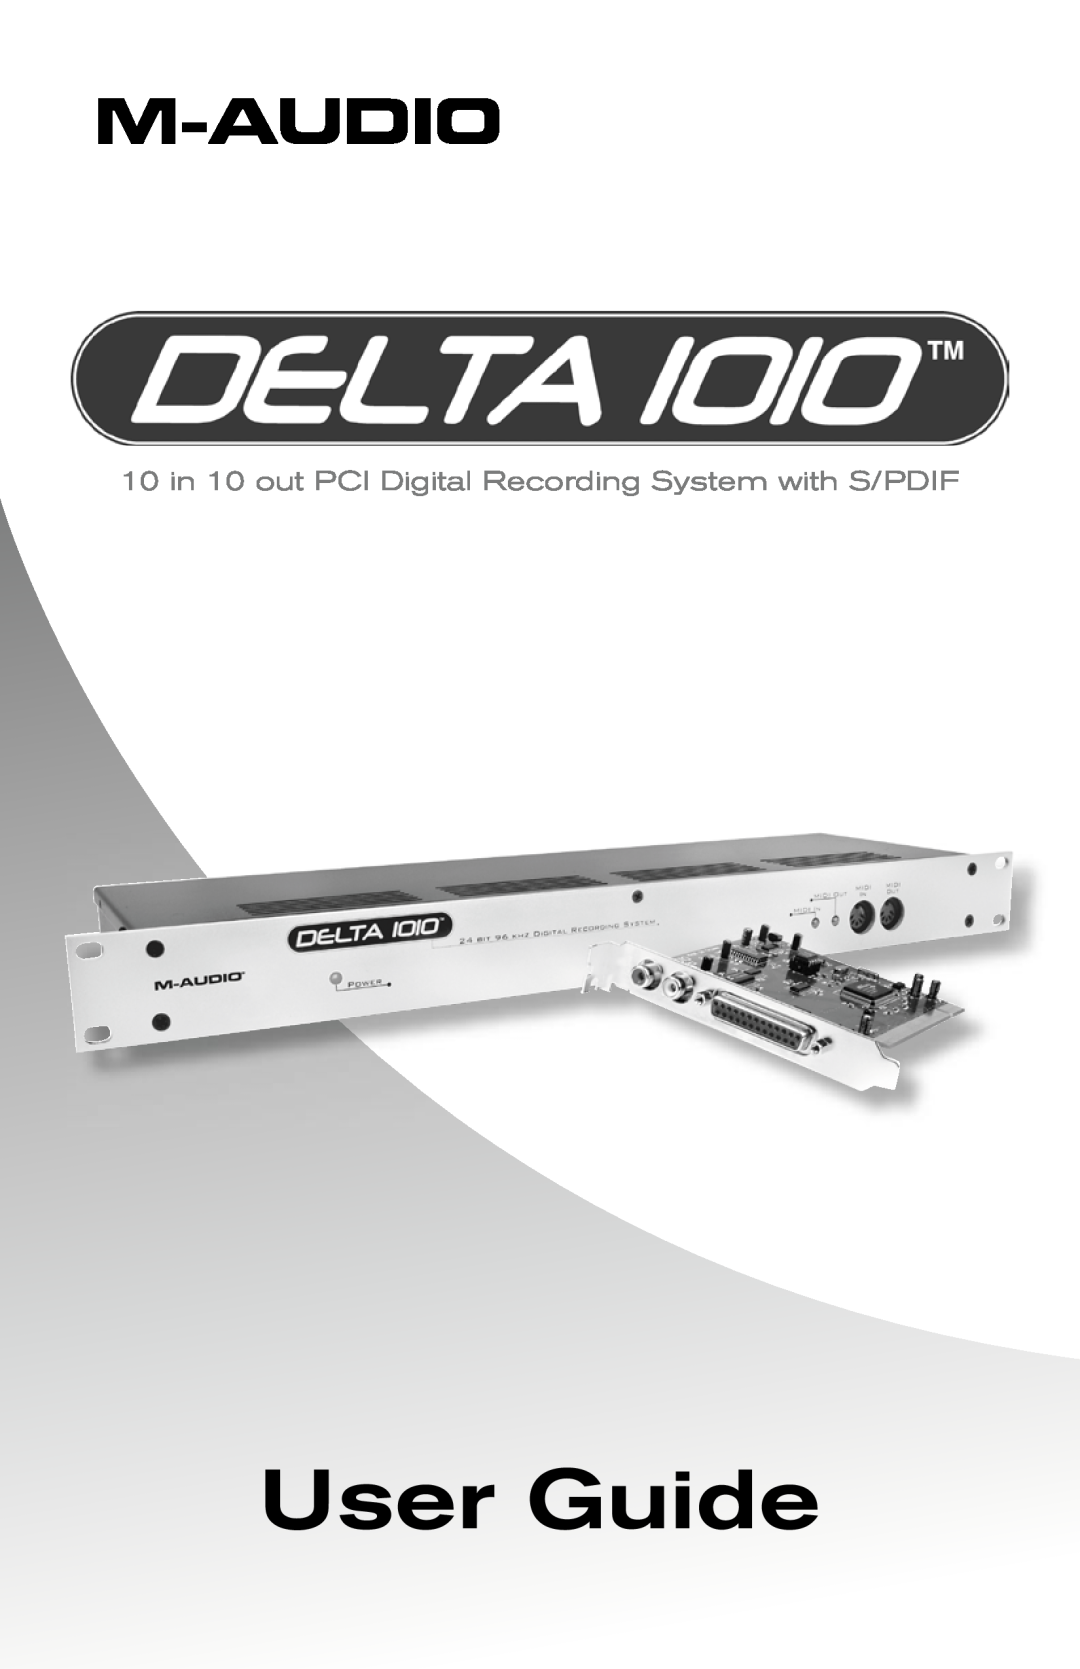 M-Audio DELTA 1010 manual User Guide 